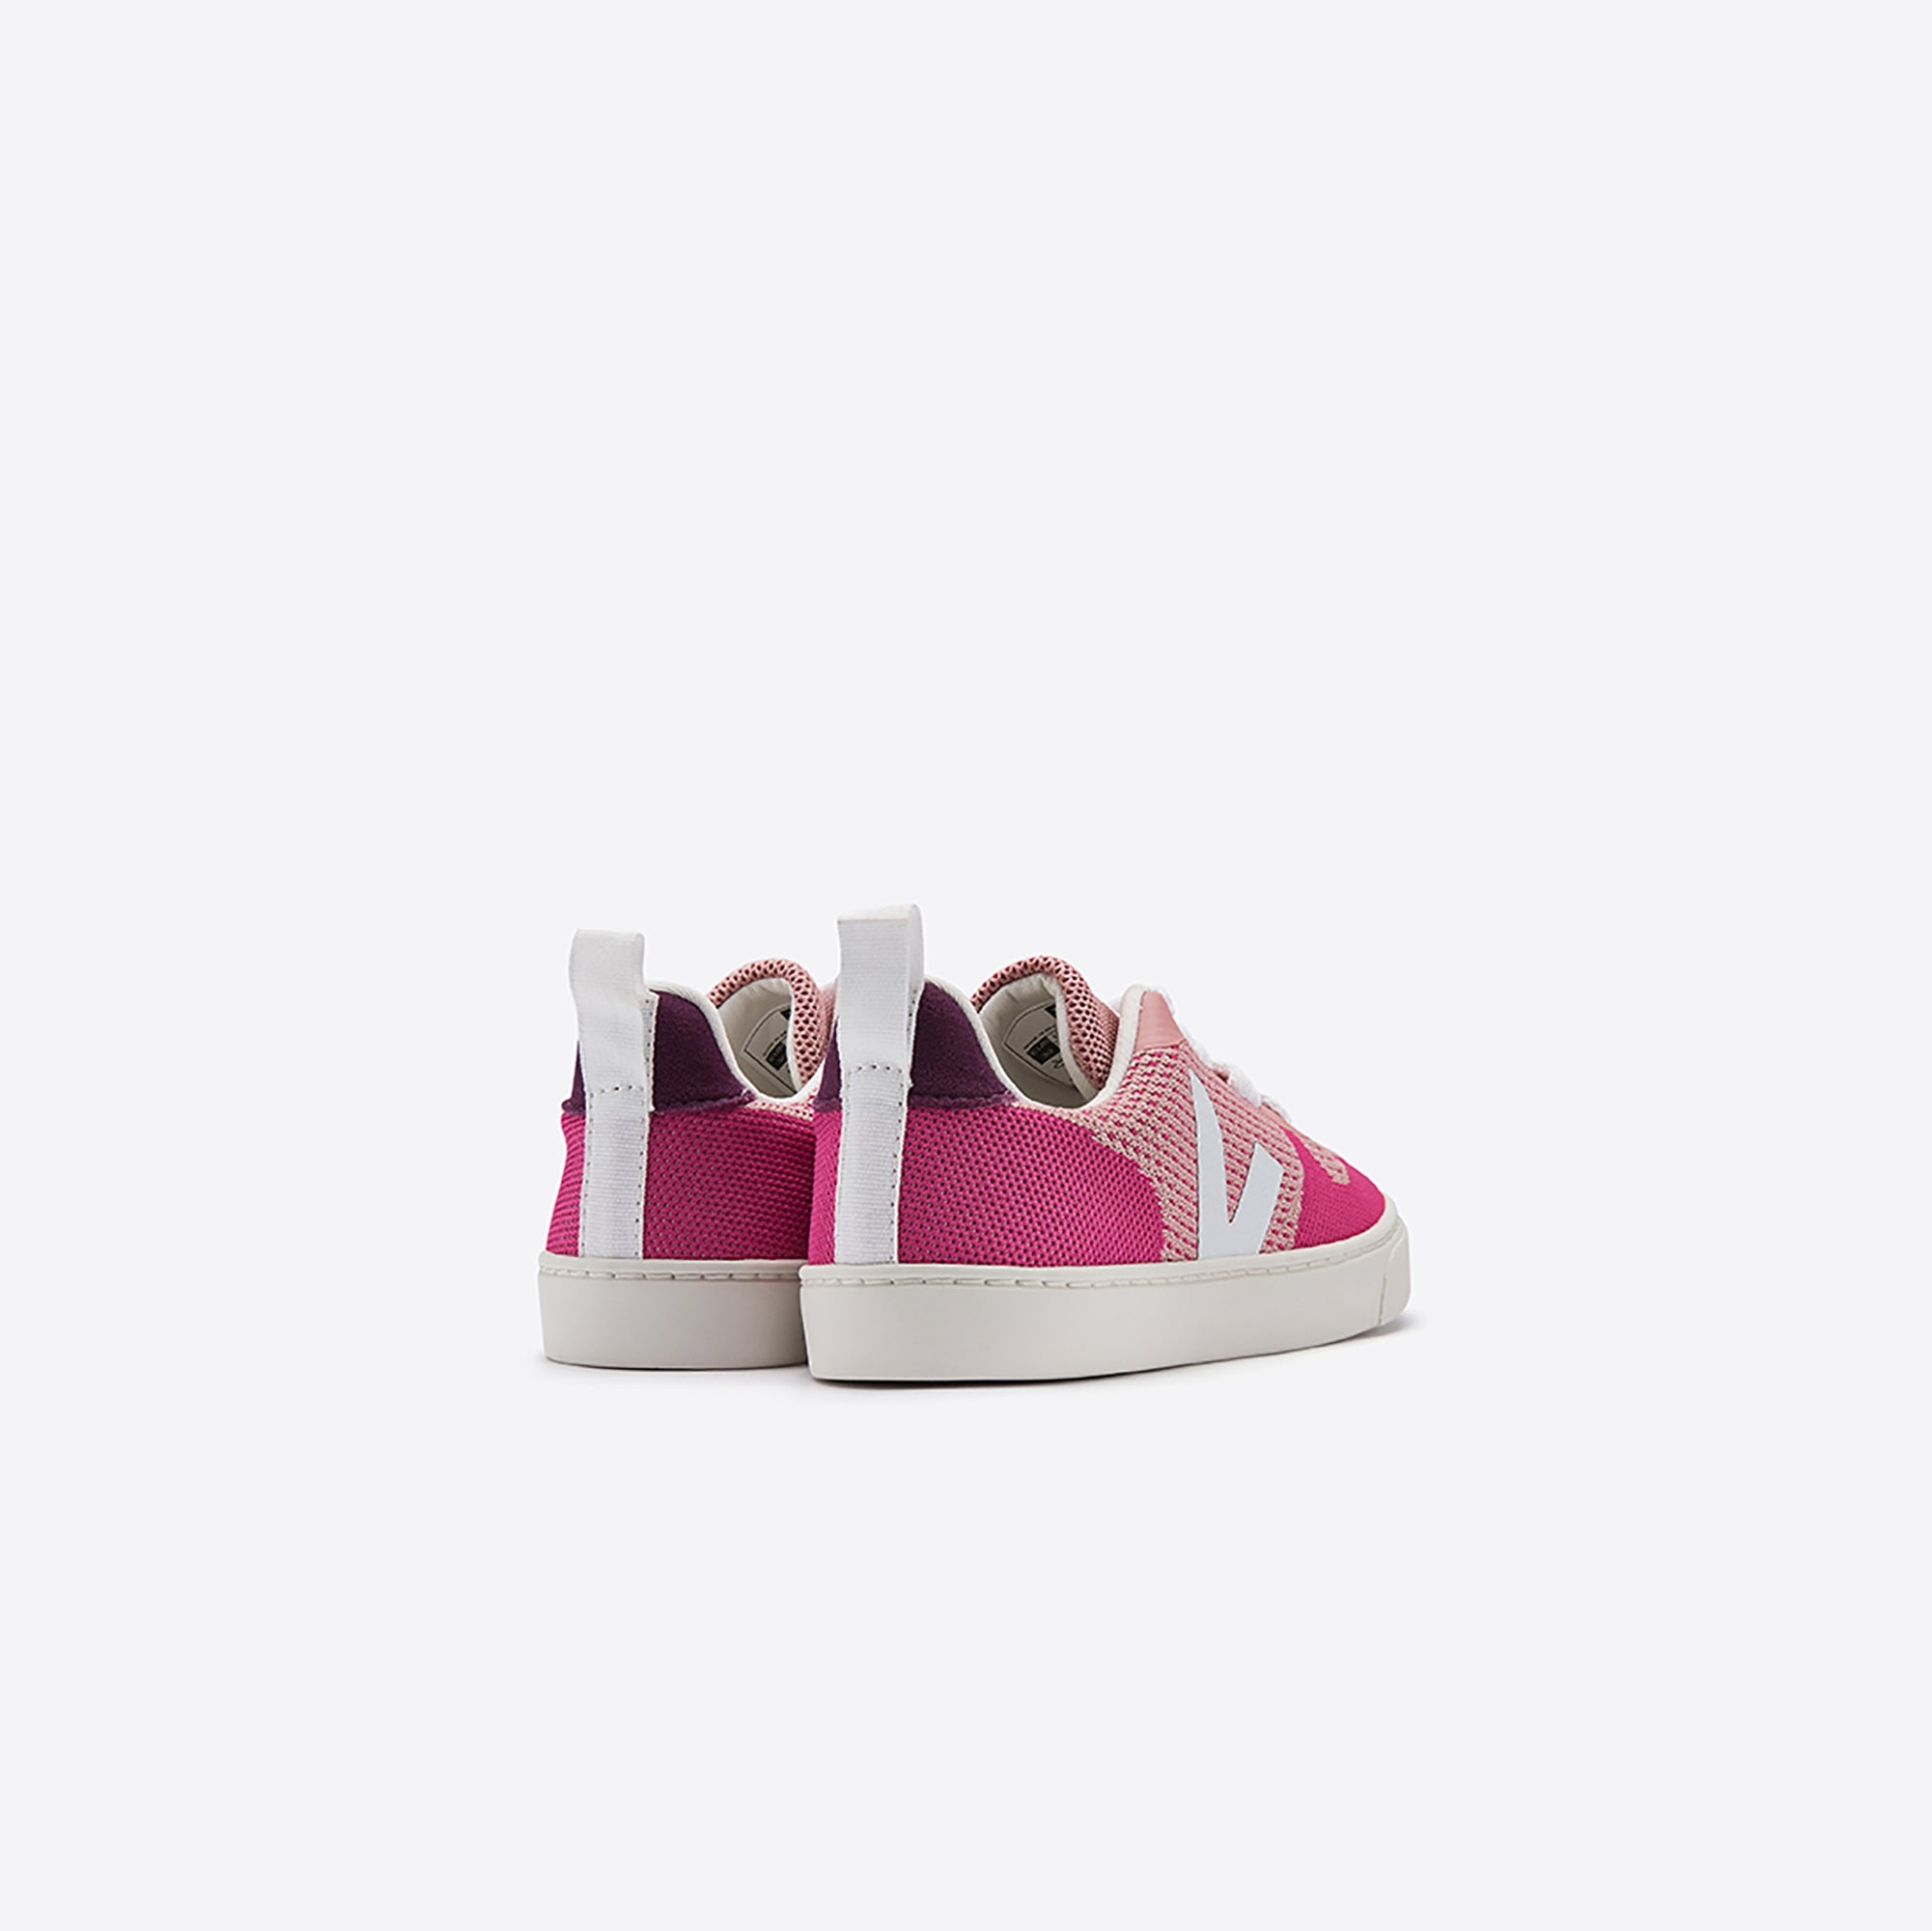 Girls Pink & White "V" Shoes